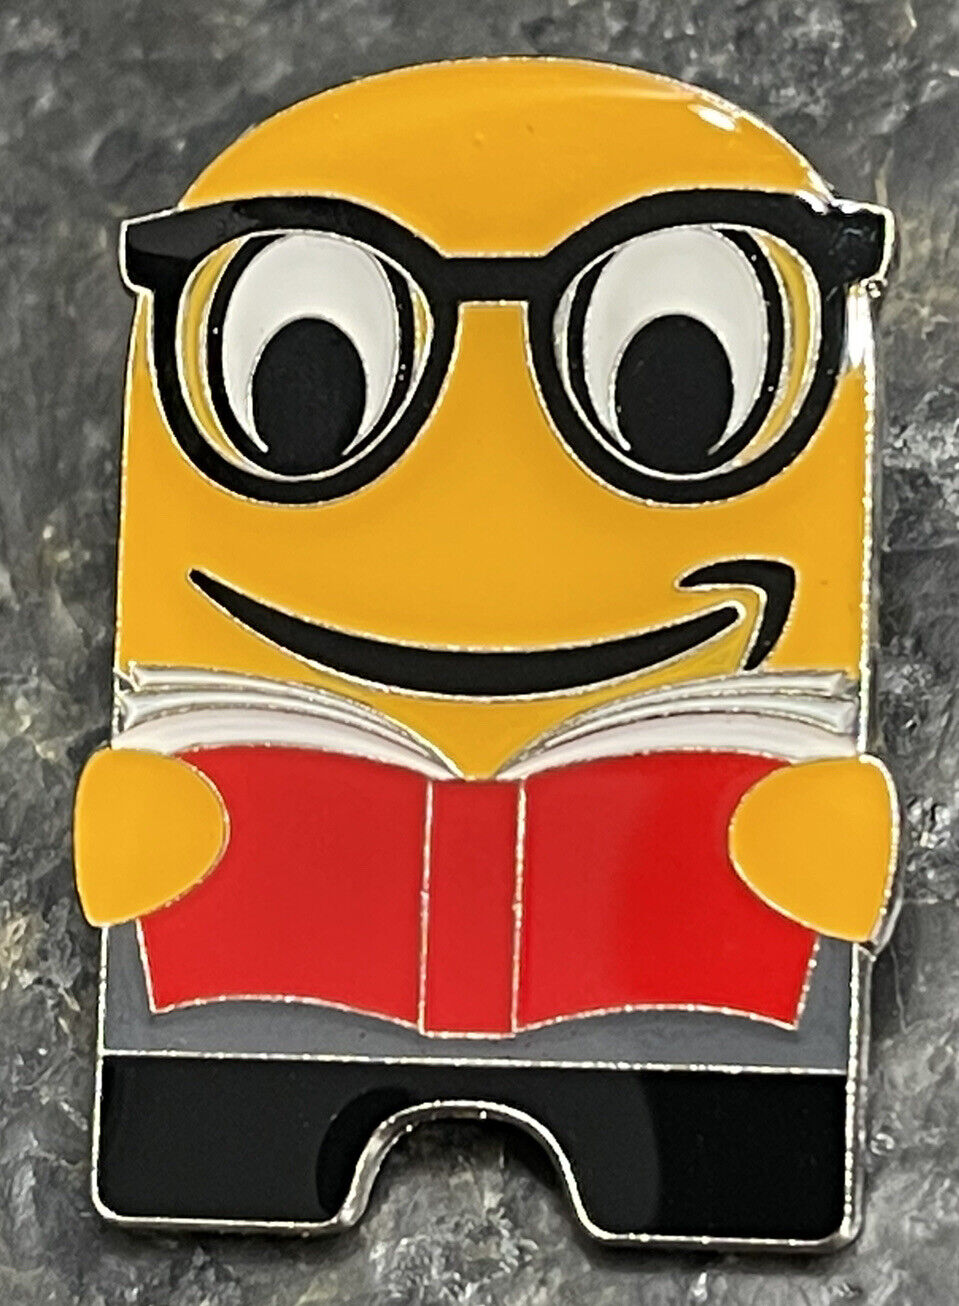 Learning ambassador/reading /students at Amazon employee peccy pin